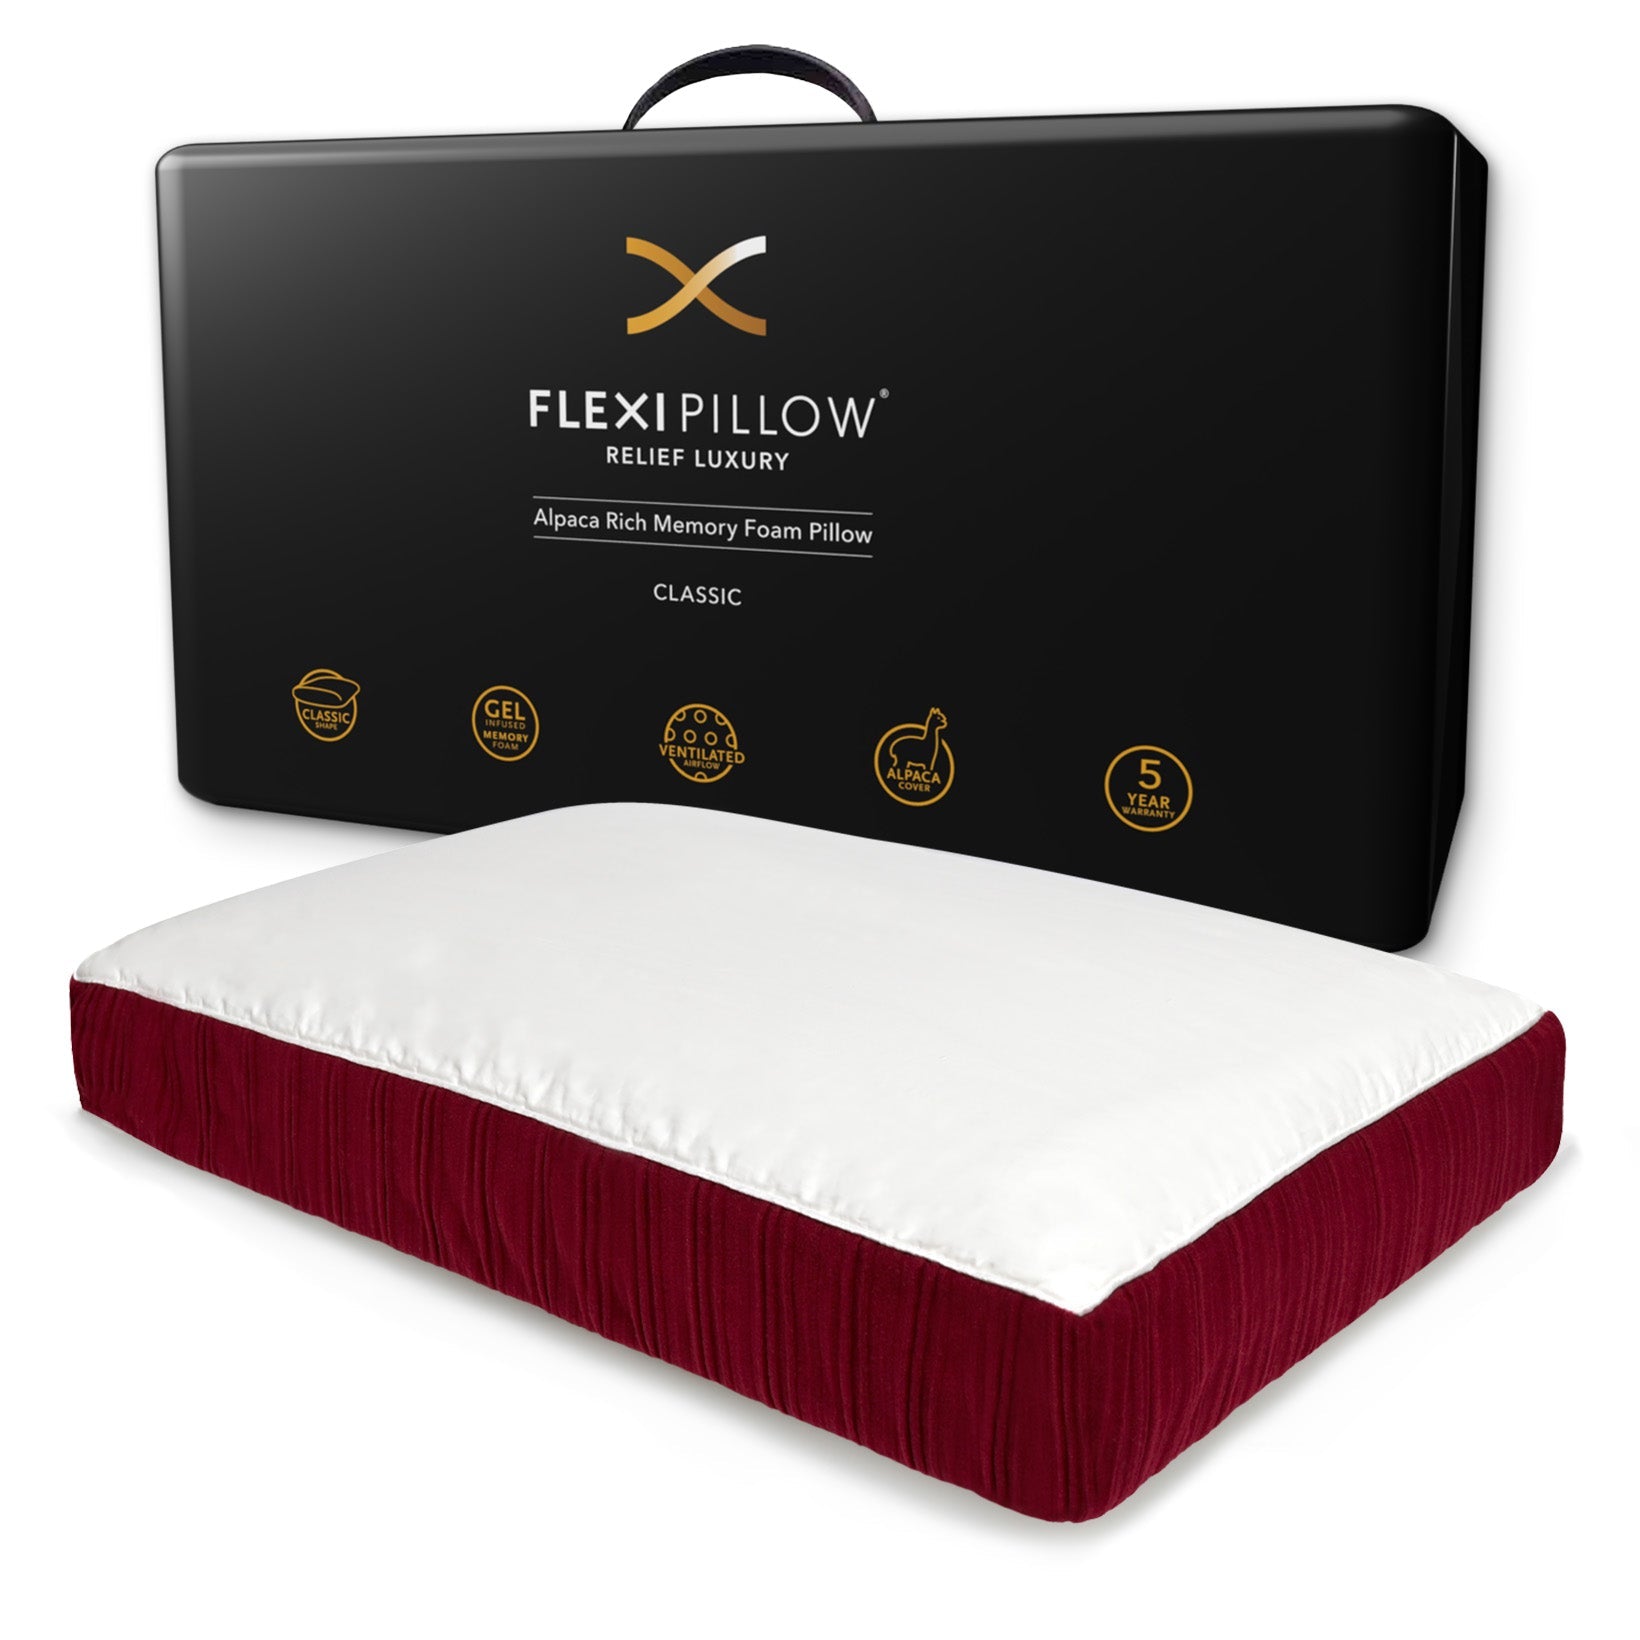 Flexi Pillow Relief Luxury Traditional Pillow - Mattress & Pillow SciencePillows